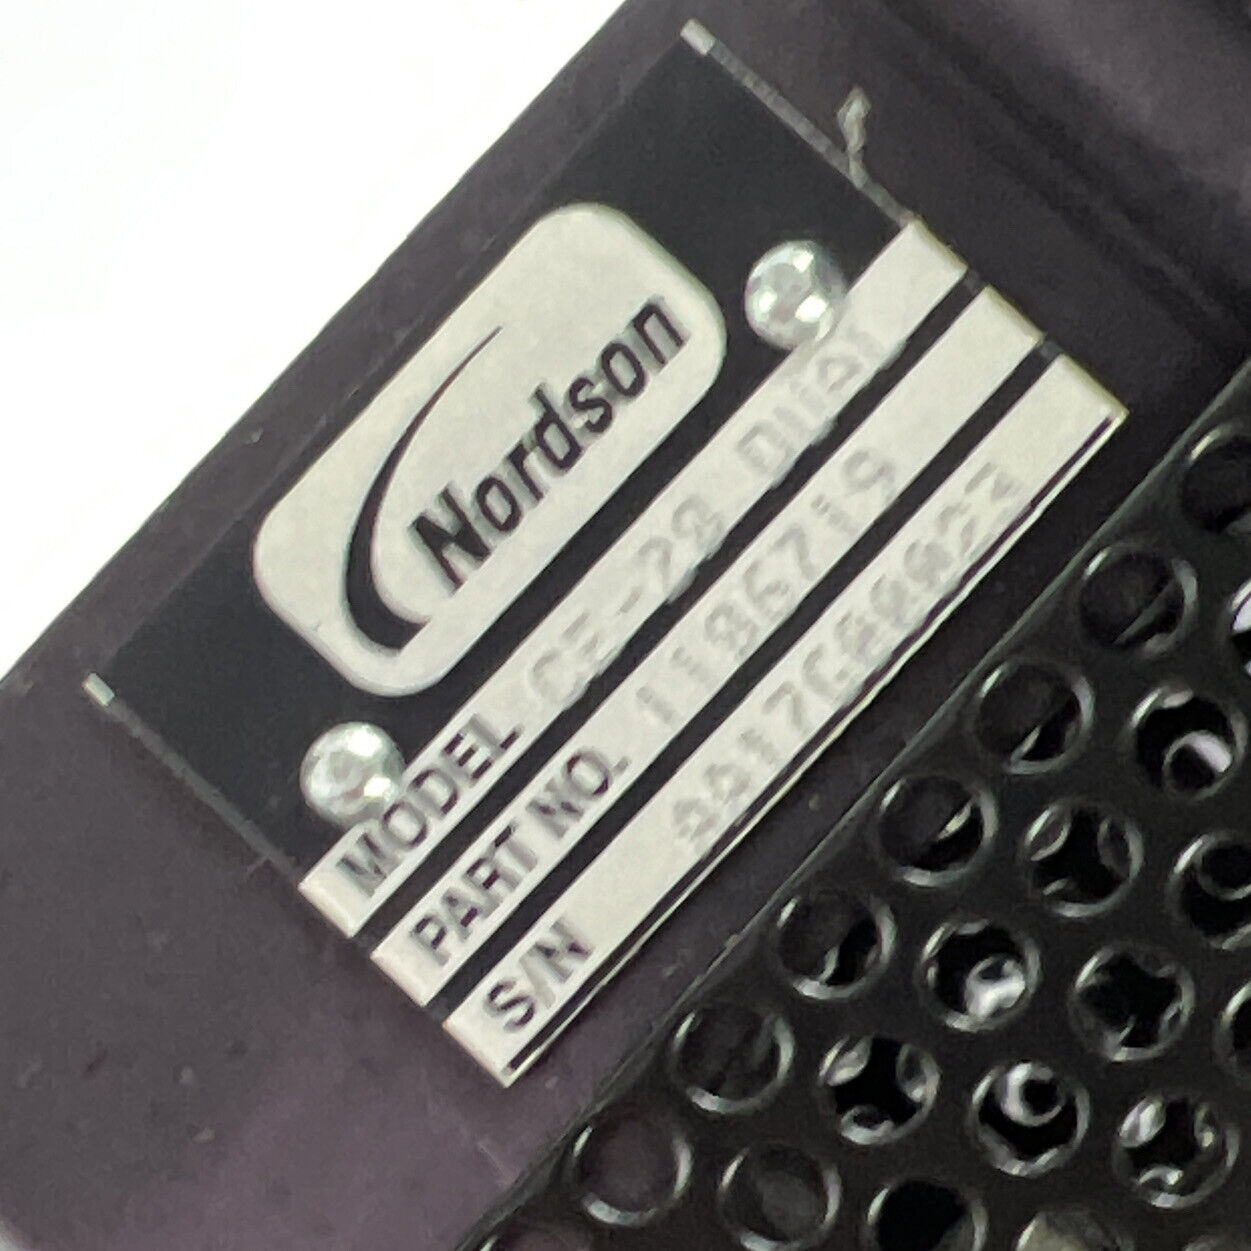 Nordson New CE-20 Dual / 1106719 Dispensing Valve - Actual Item Pictured (OV109)